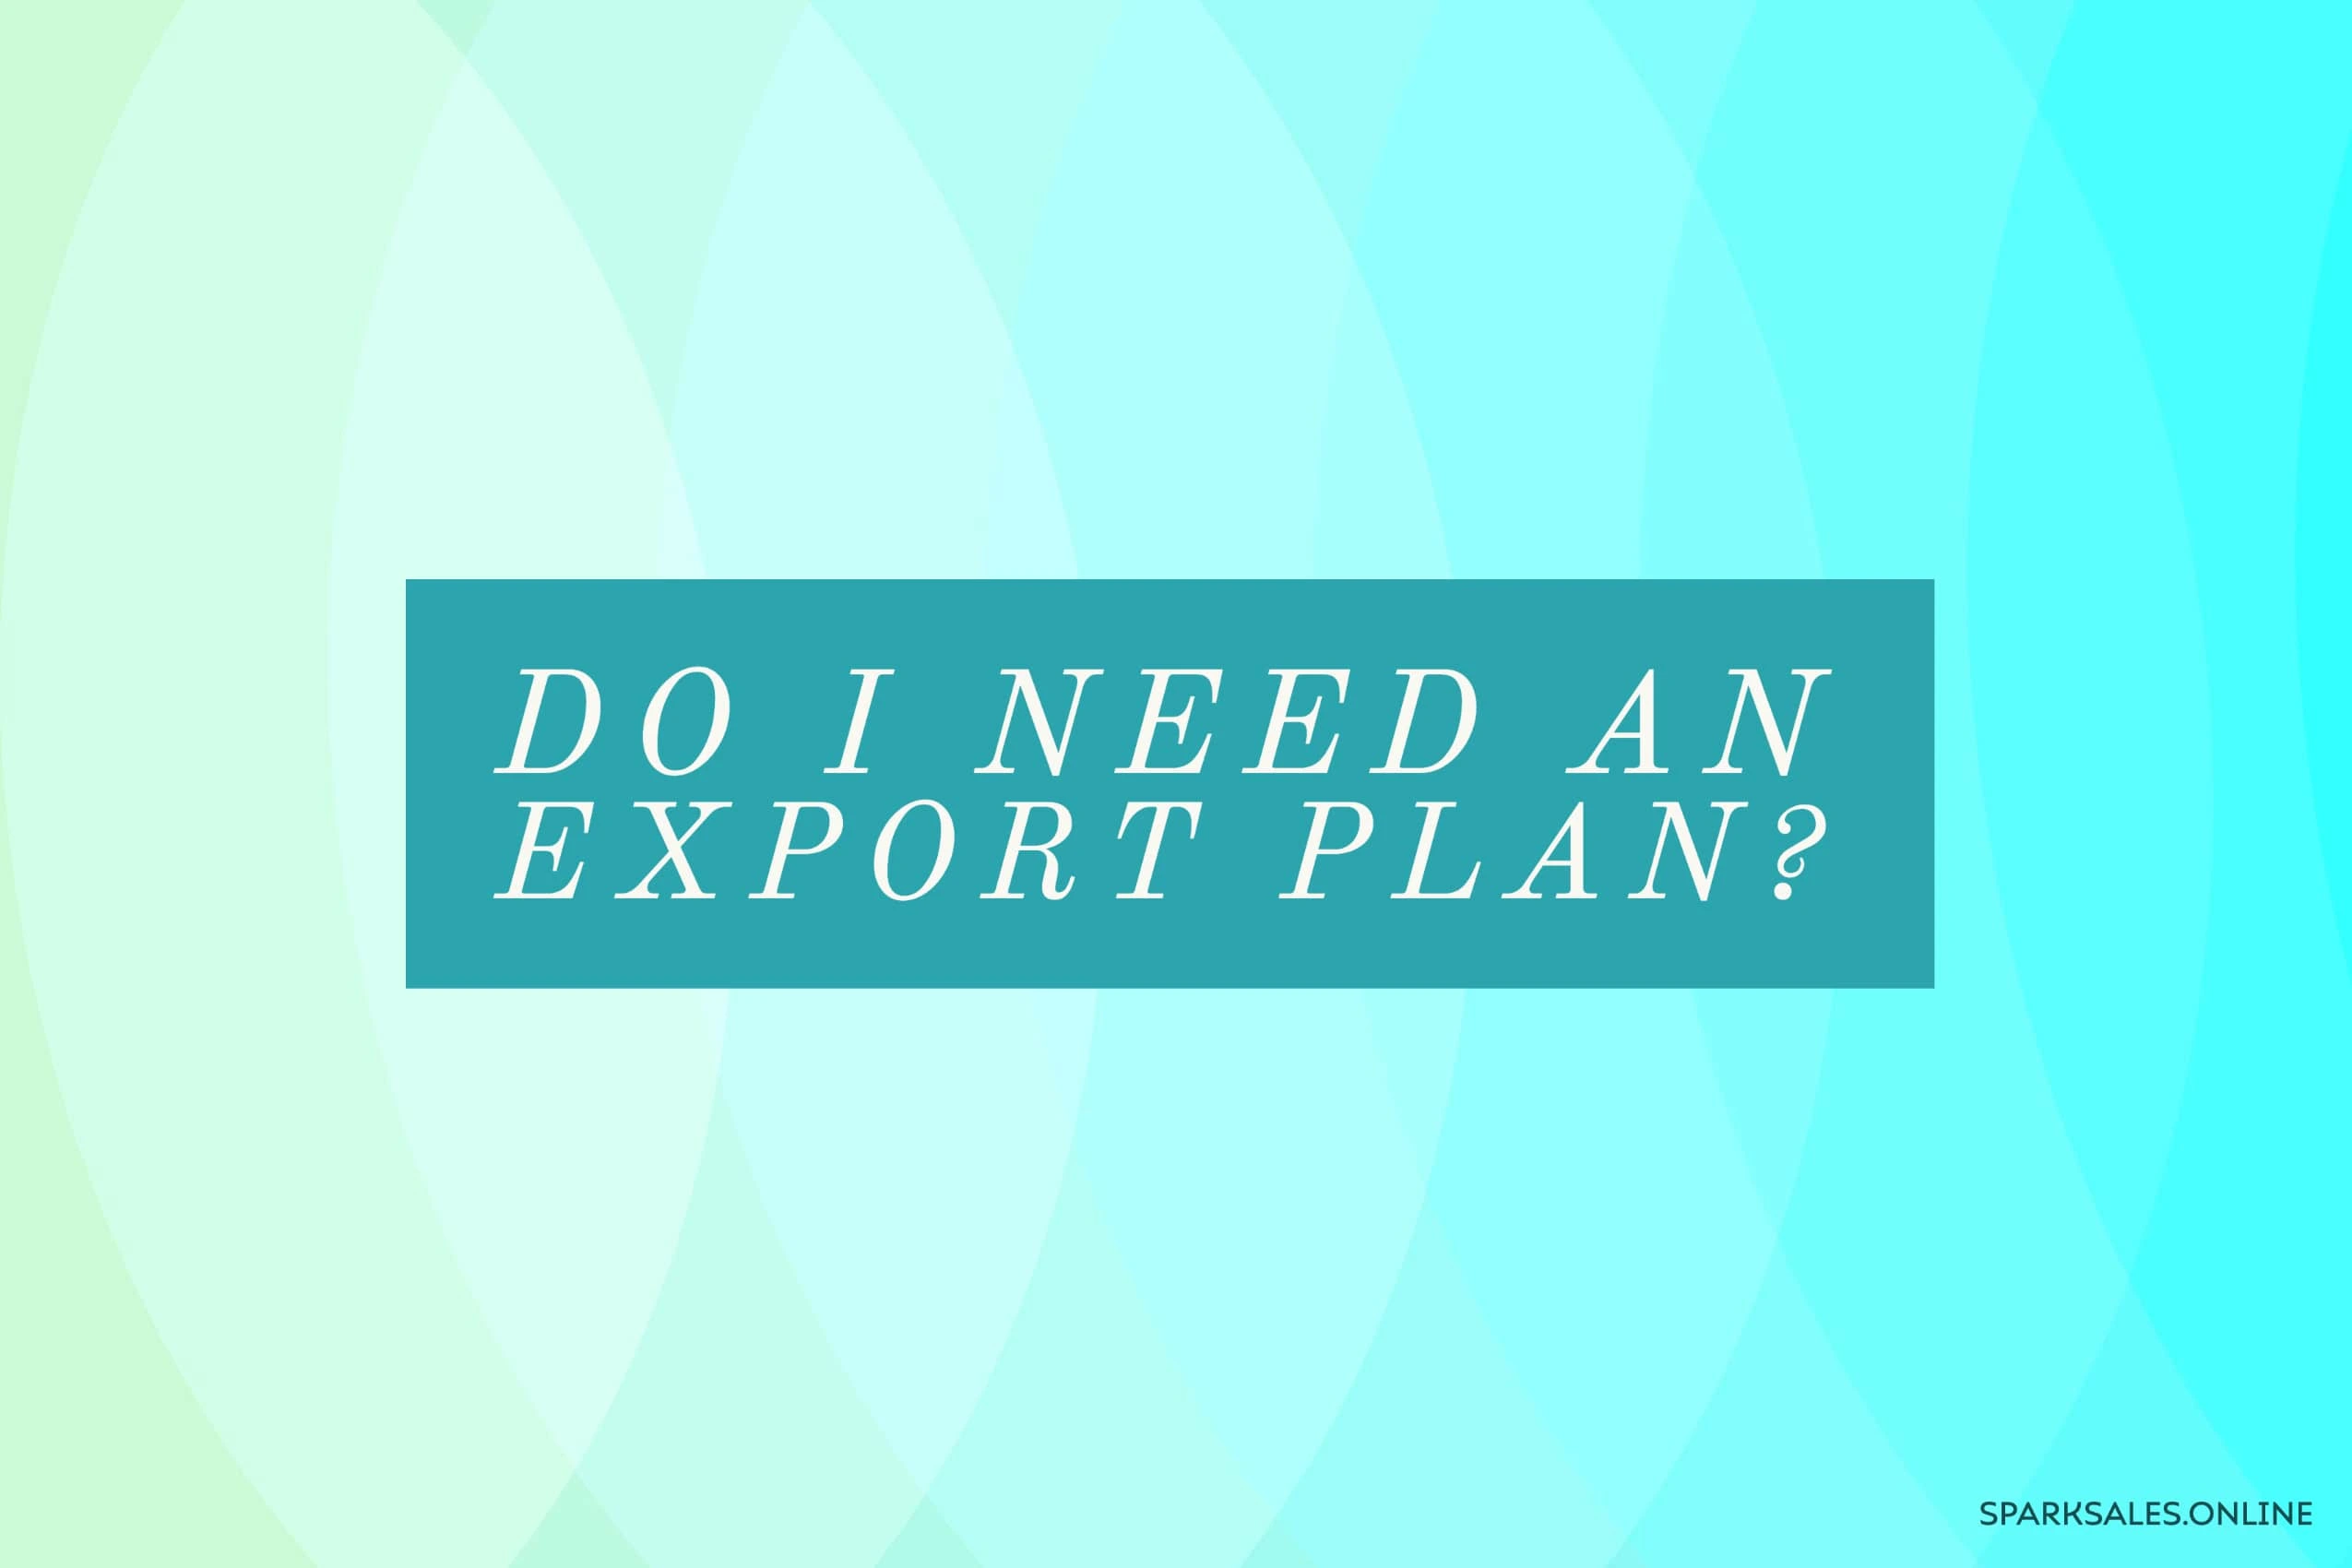 Do I need an export plan?